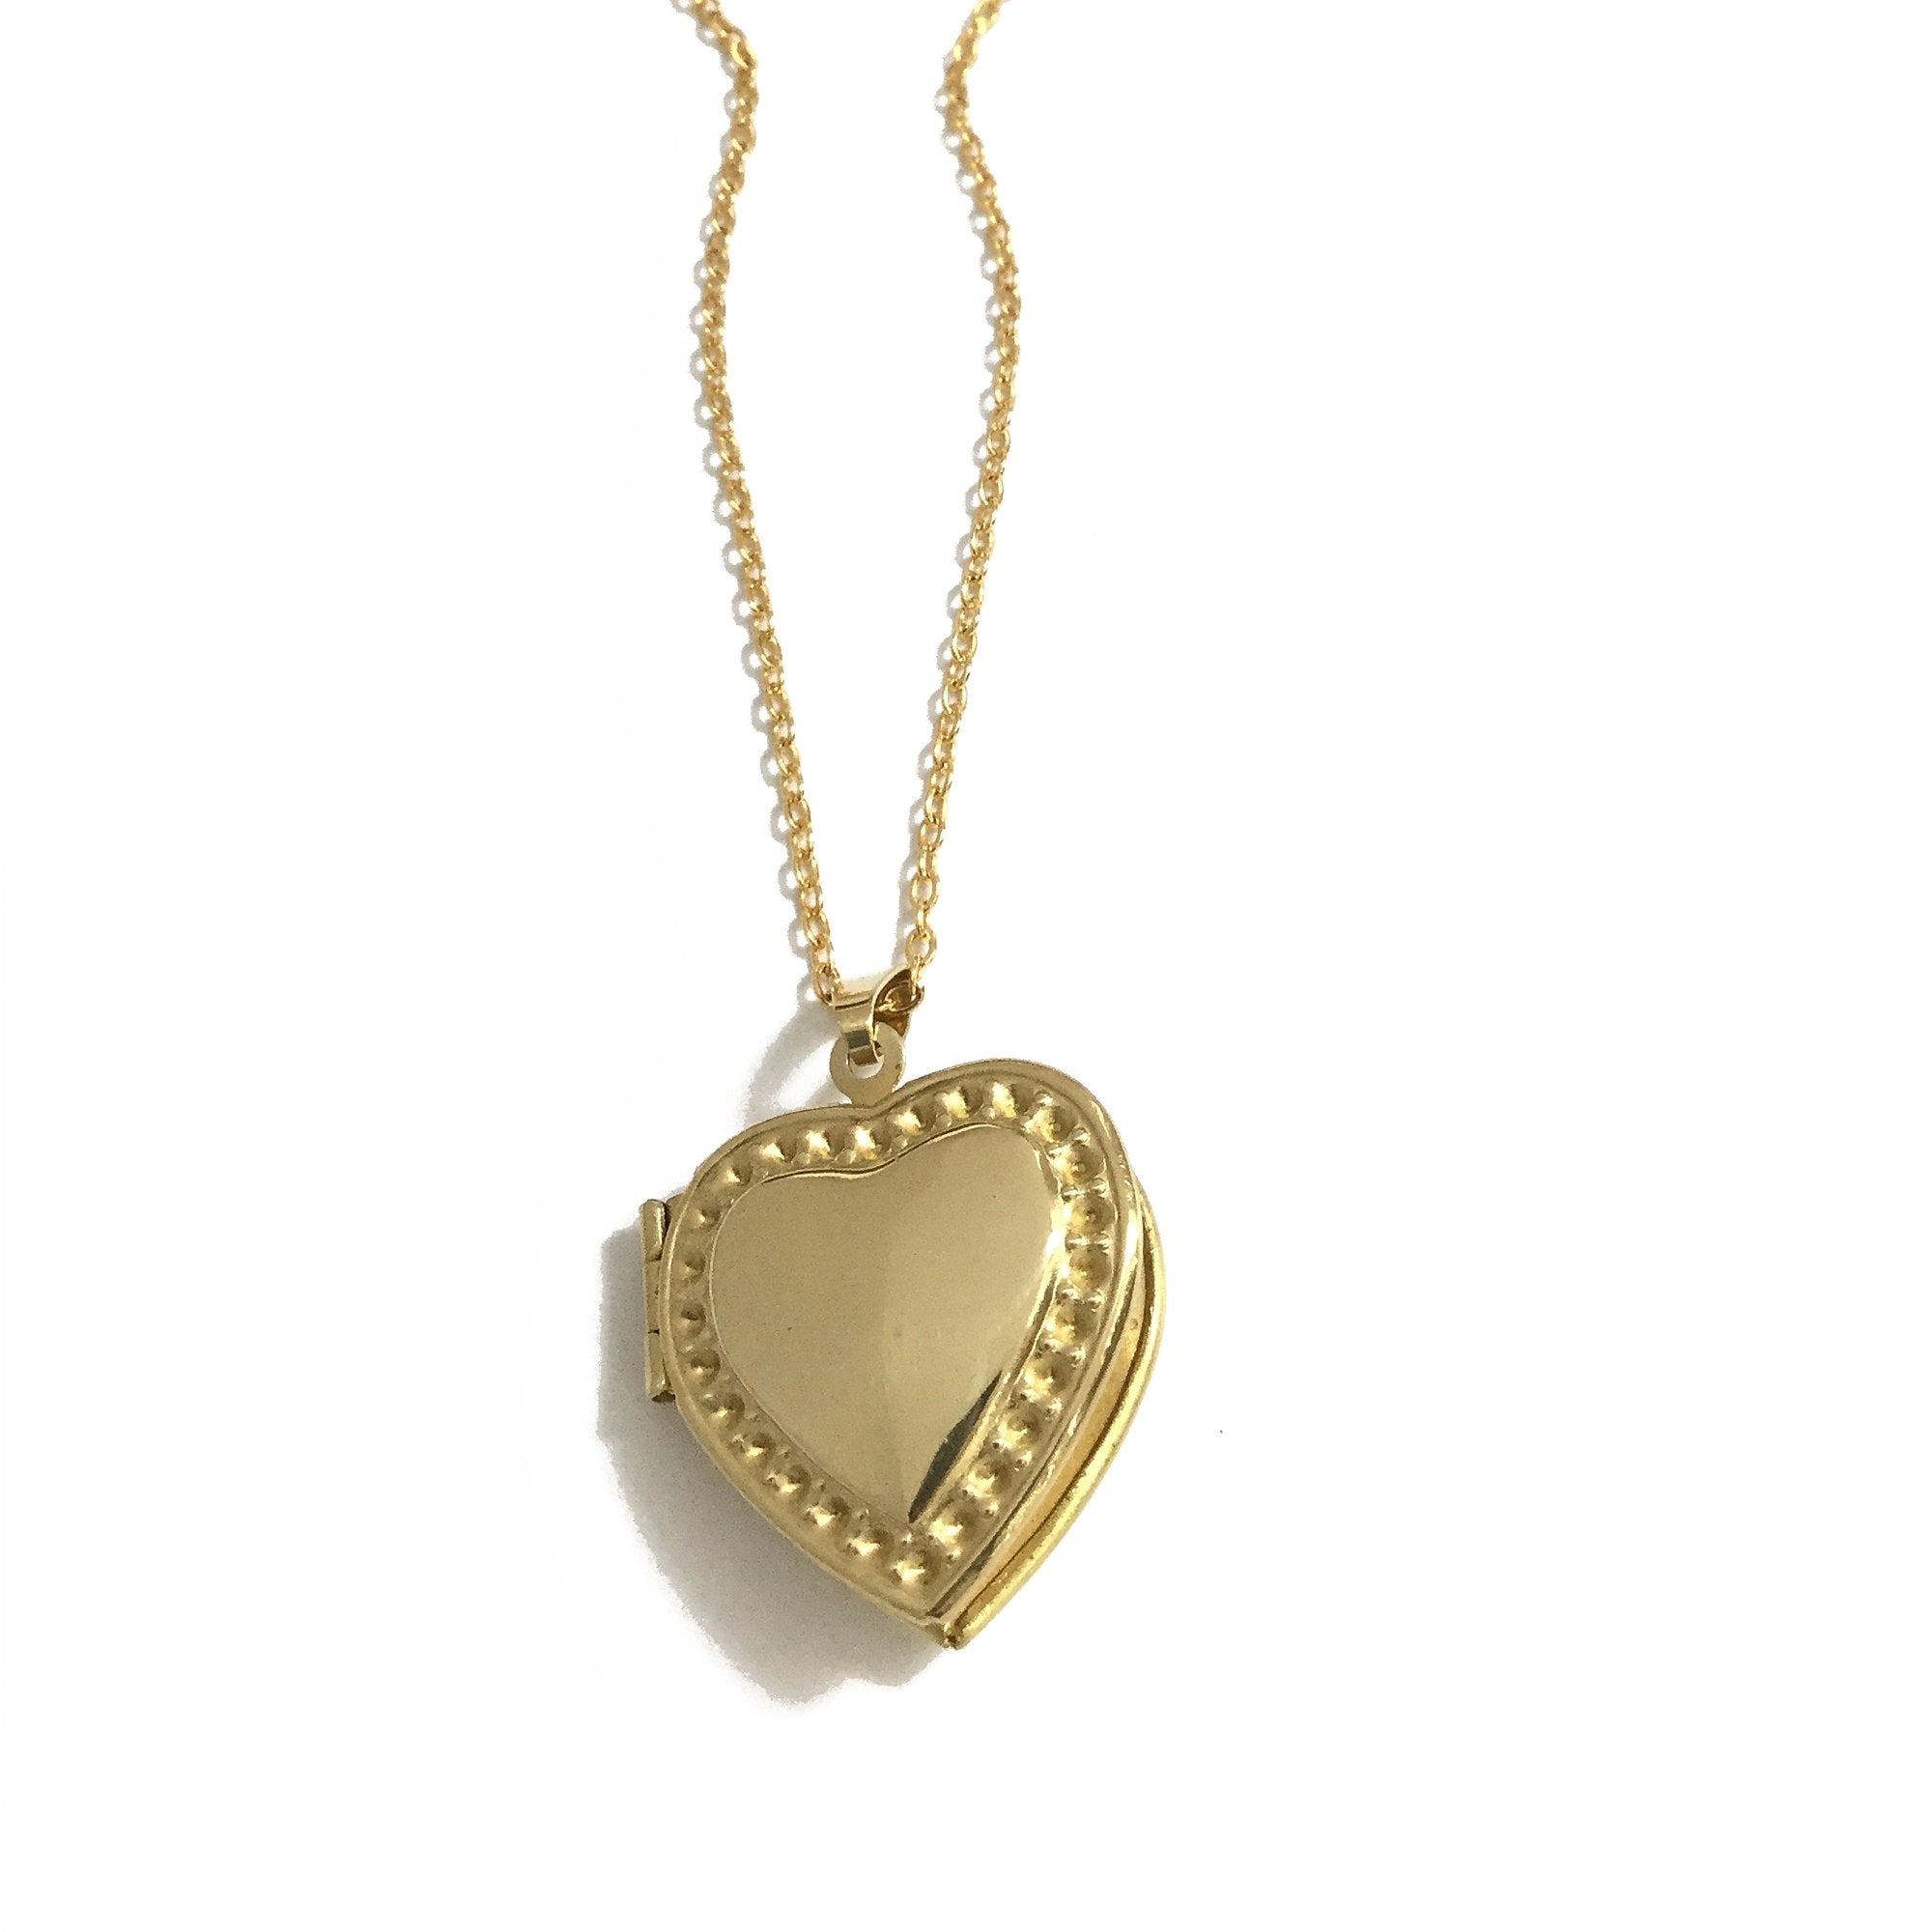 Golden brass keepsake heart locket necklace